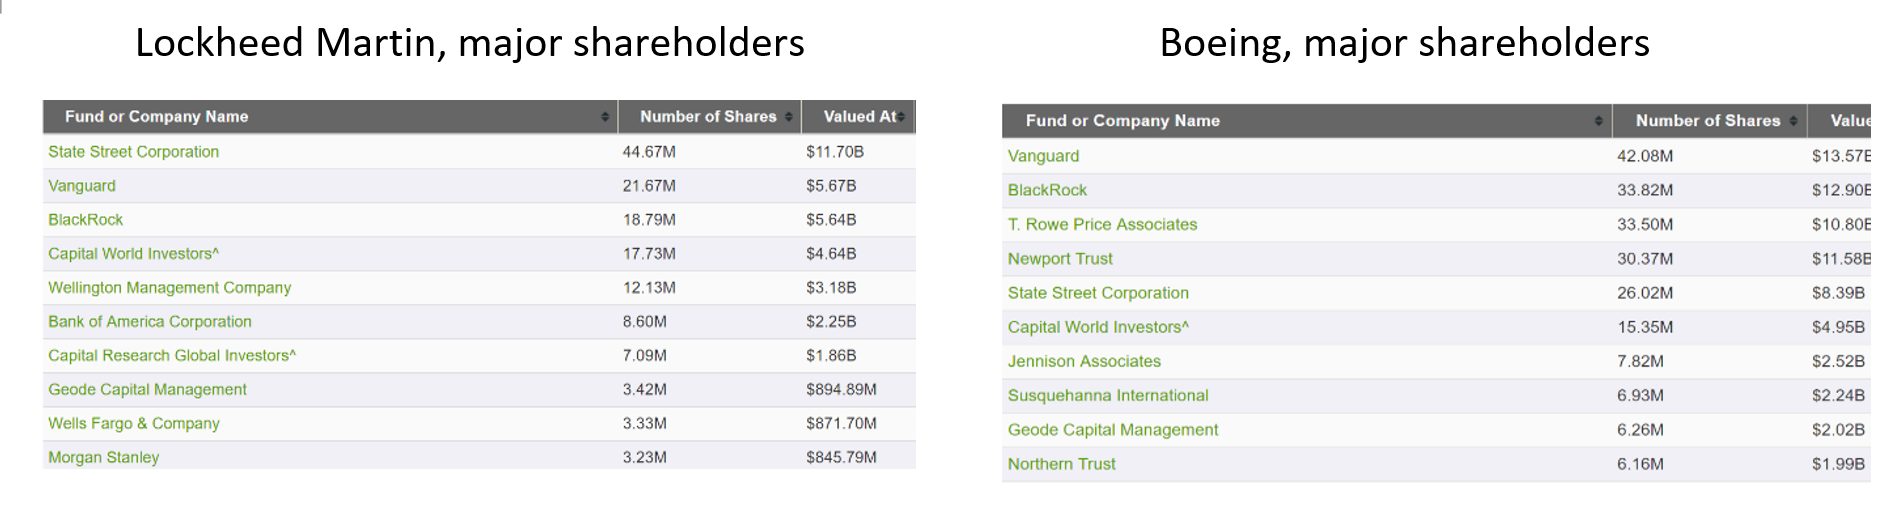 Military-Industrial shareholders